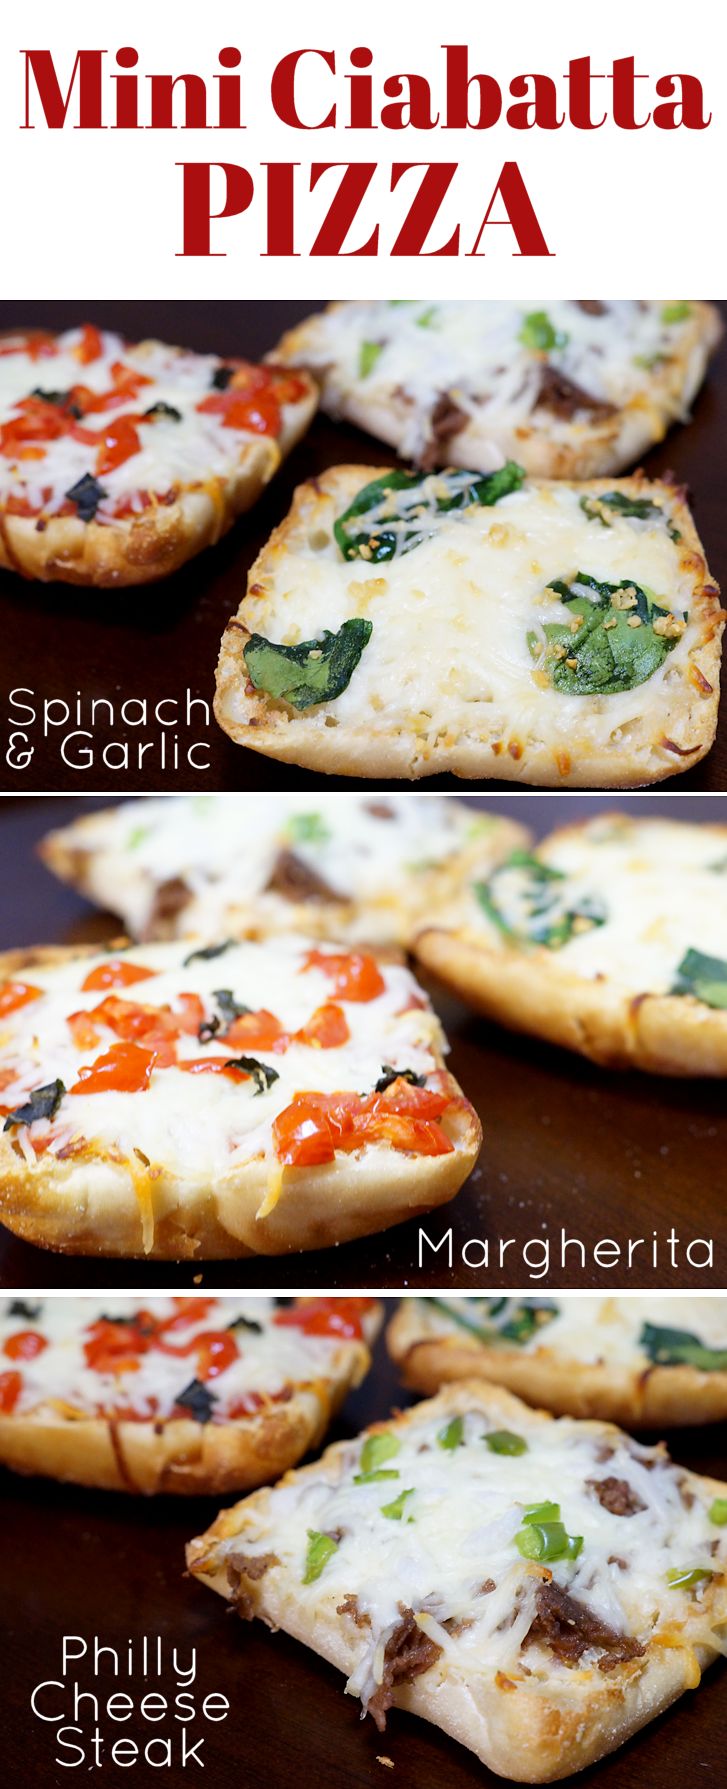 3 Mini Ciabatta Pizza Recipes for Game Day :: Margherita, Spinach & Garlic, Philly Cheese Steak